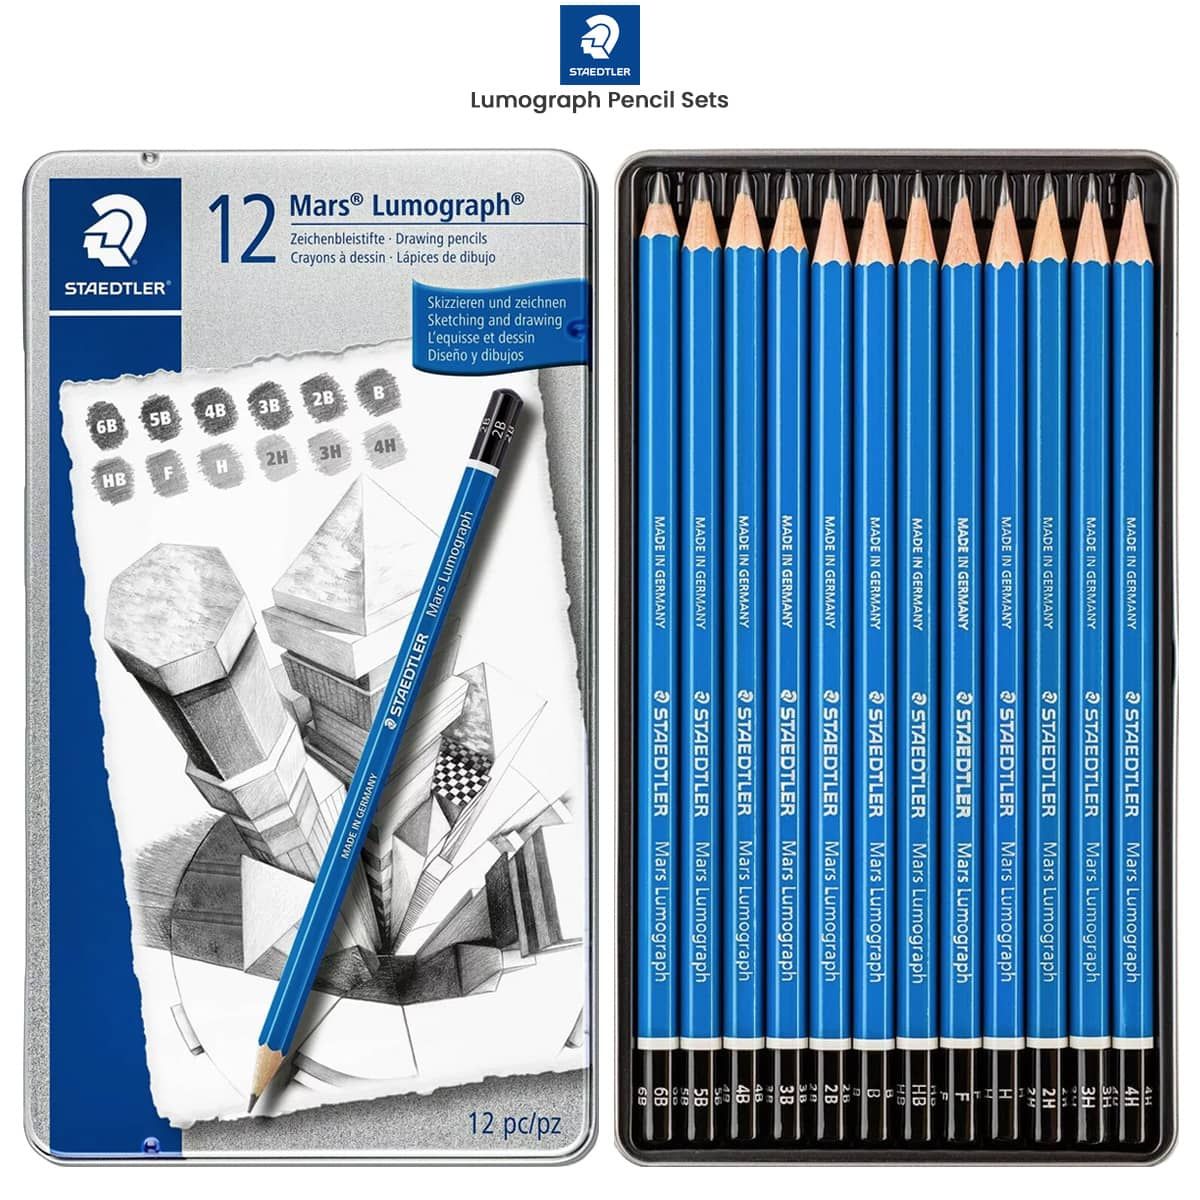 https://www.jerrysartarama.com/media/catalog/product/cache/ecb49a32eeb5603594b082bd5fe65733/s/t/staedtler-lumograph-pencils-main.jpg